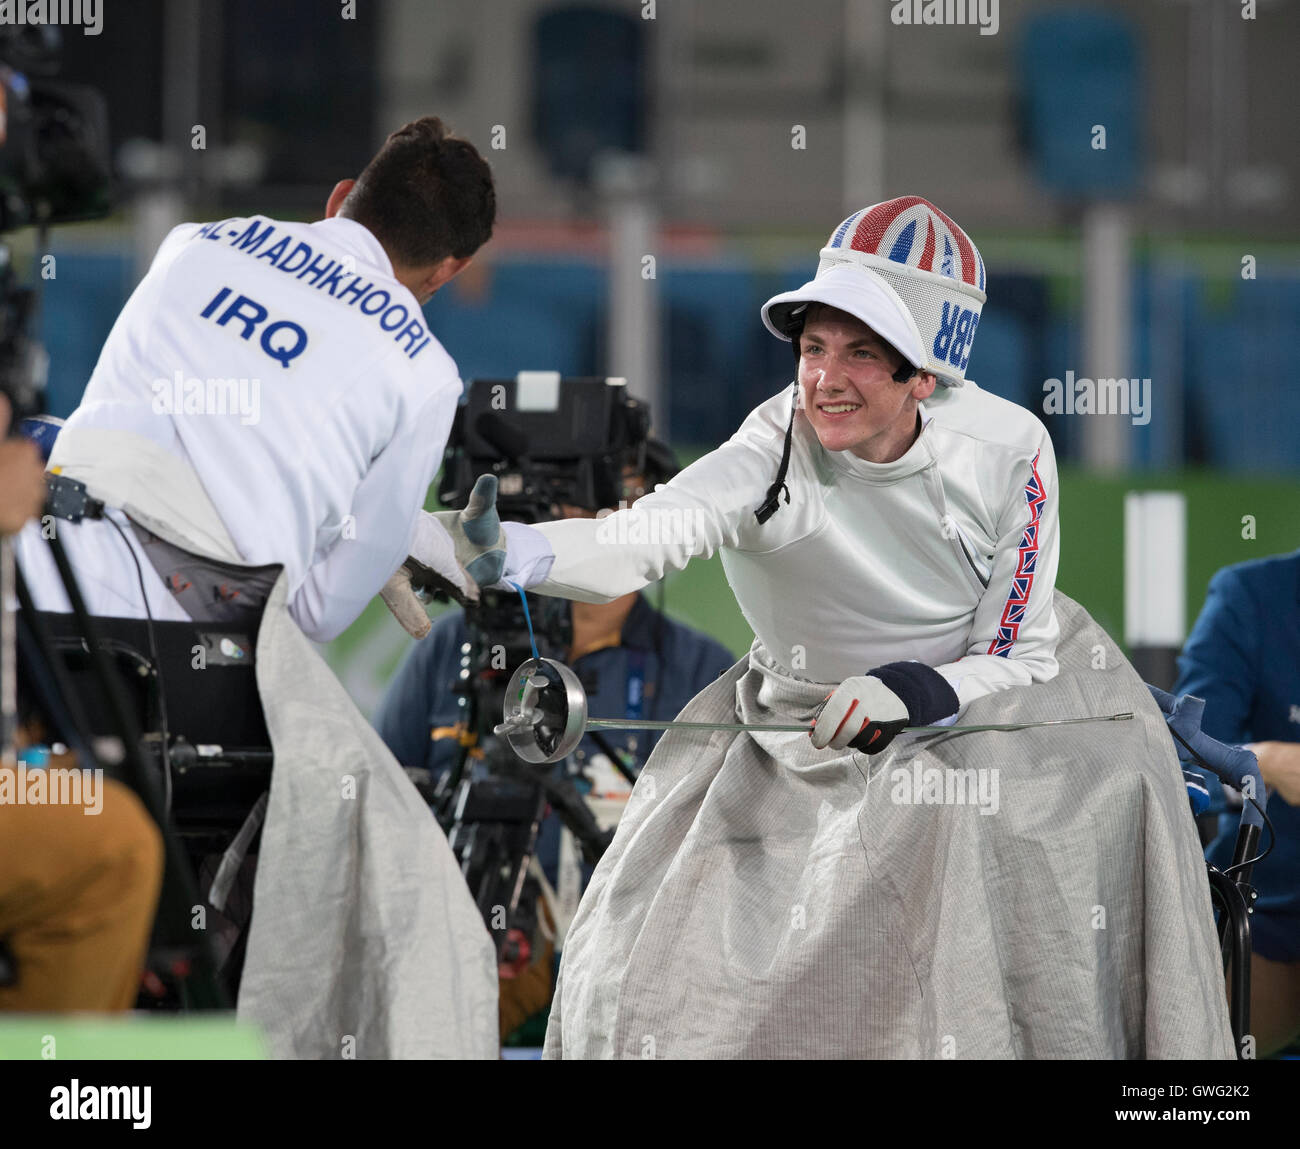 Piers Gilliver of Great Britain und Zainulabdeen Al-Madhkhoori des Irak im Herren Degen Katze. Ein Halbfinale bei the2016 Paralympics. Stockfoto